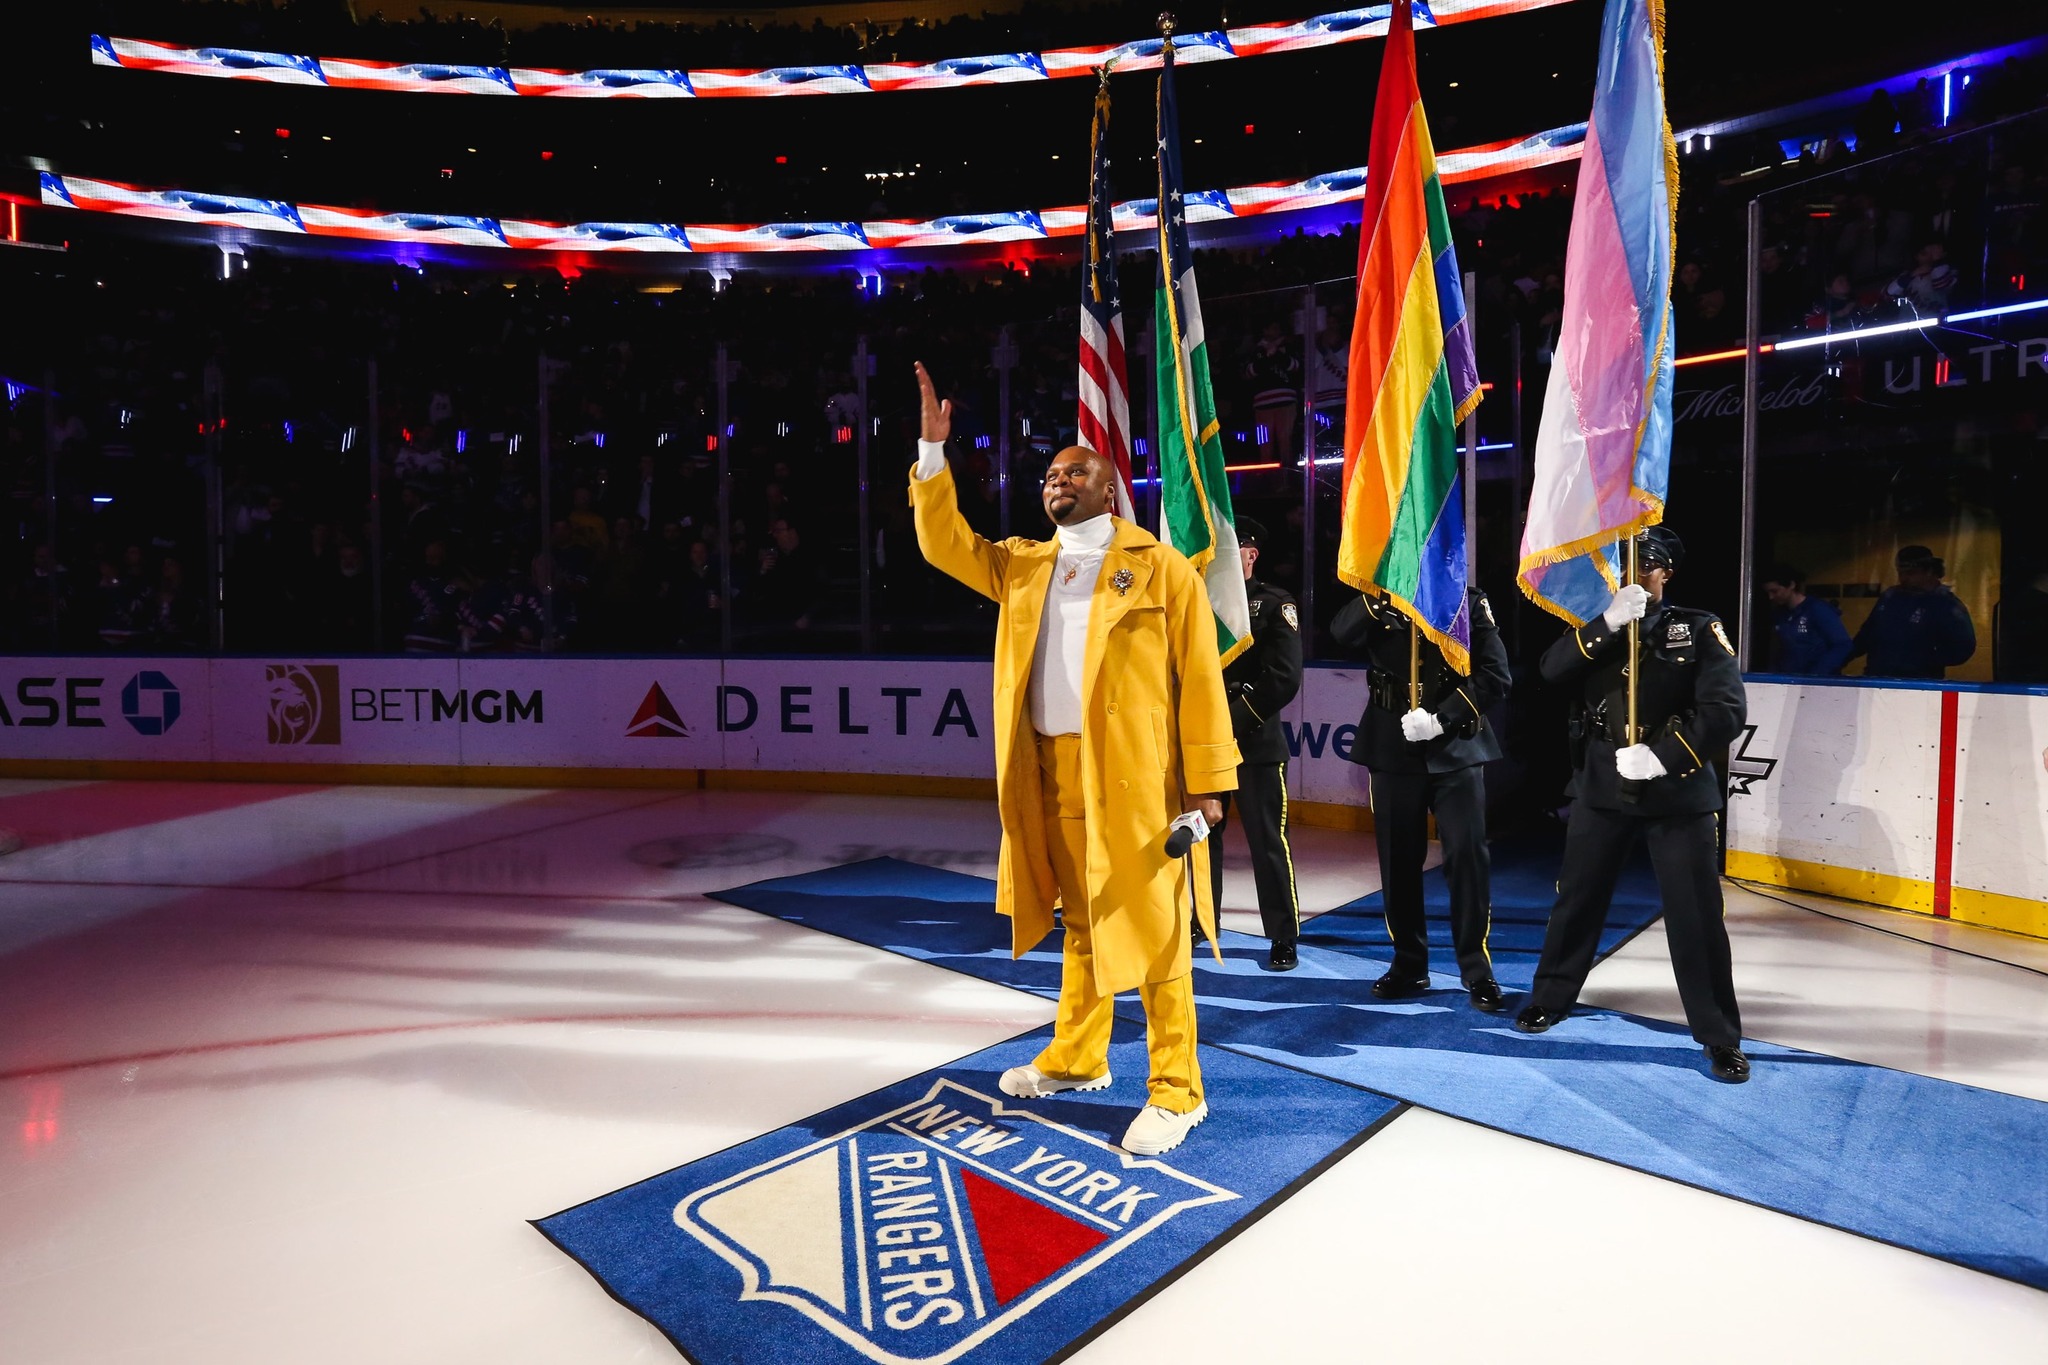 NHL bans Pride jerseys during warm-ups